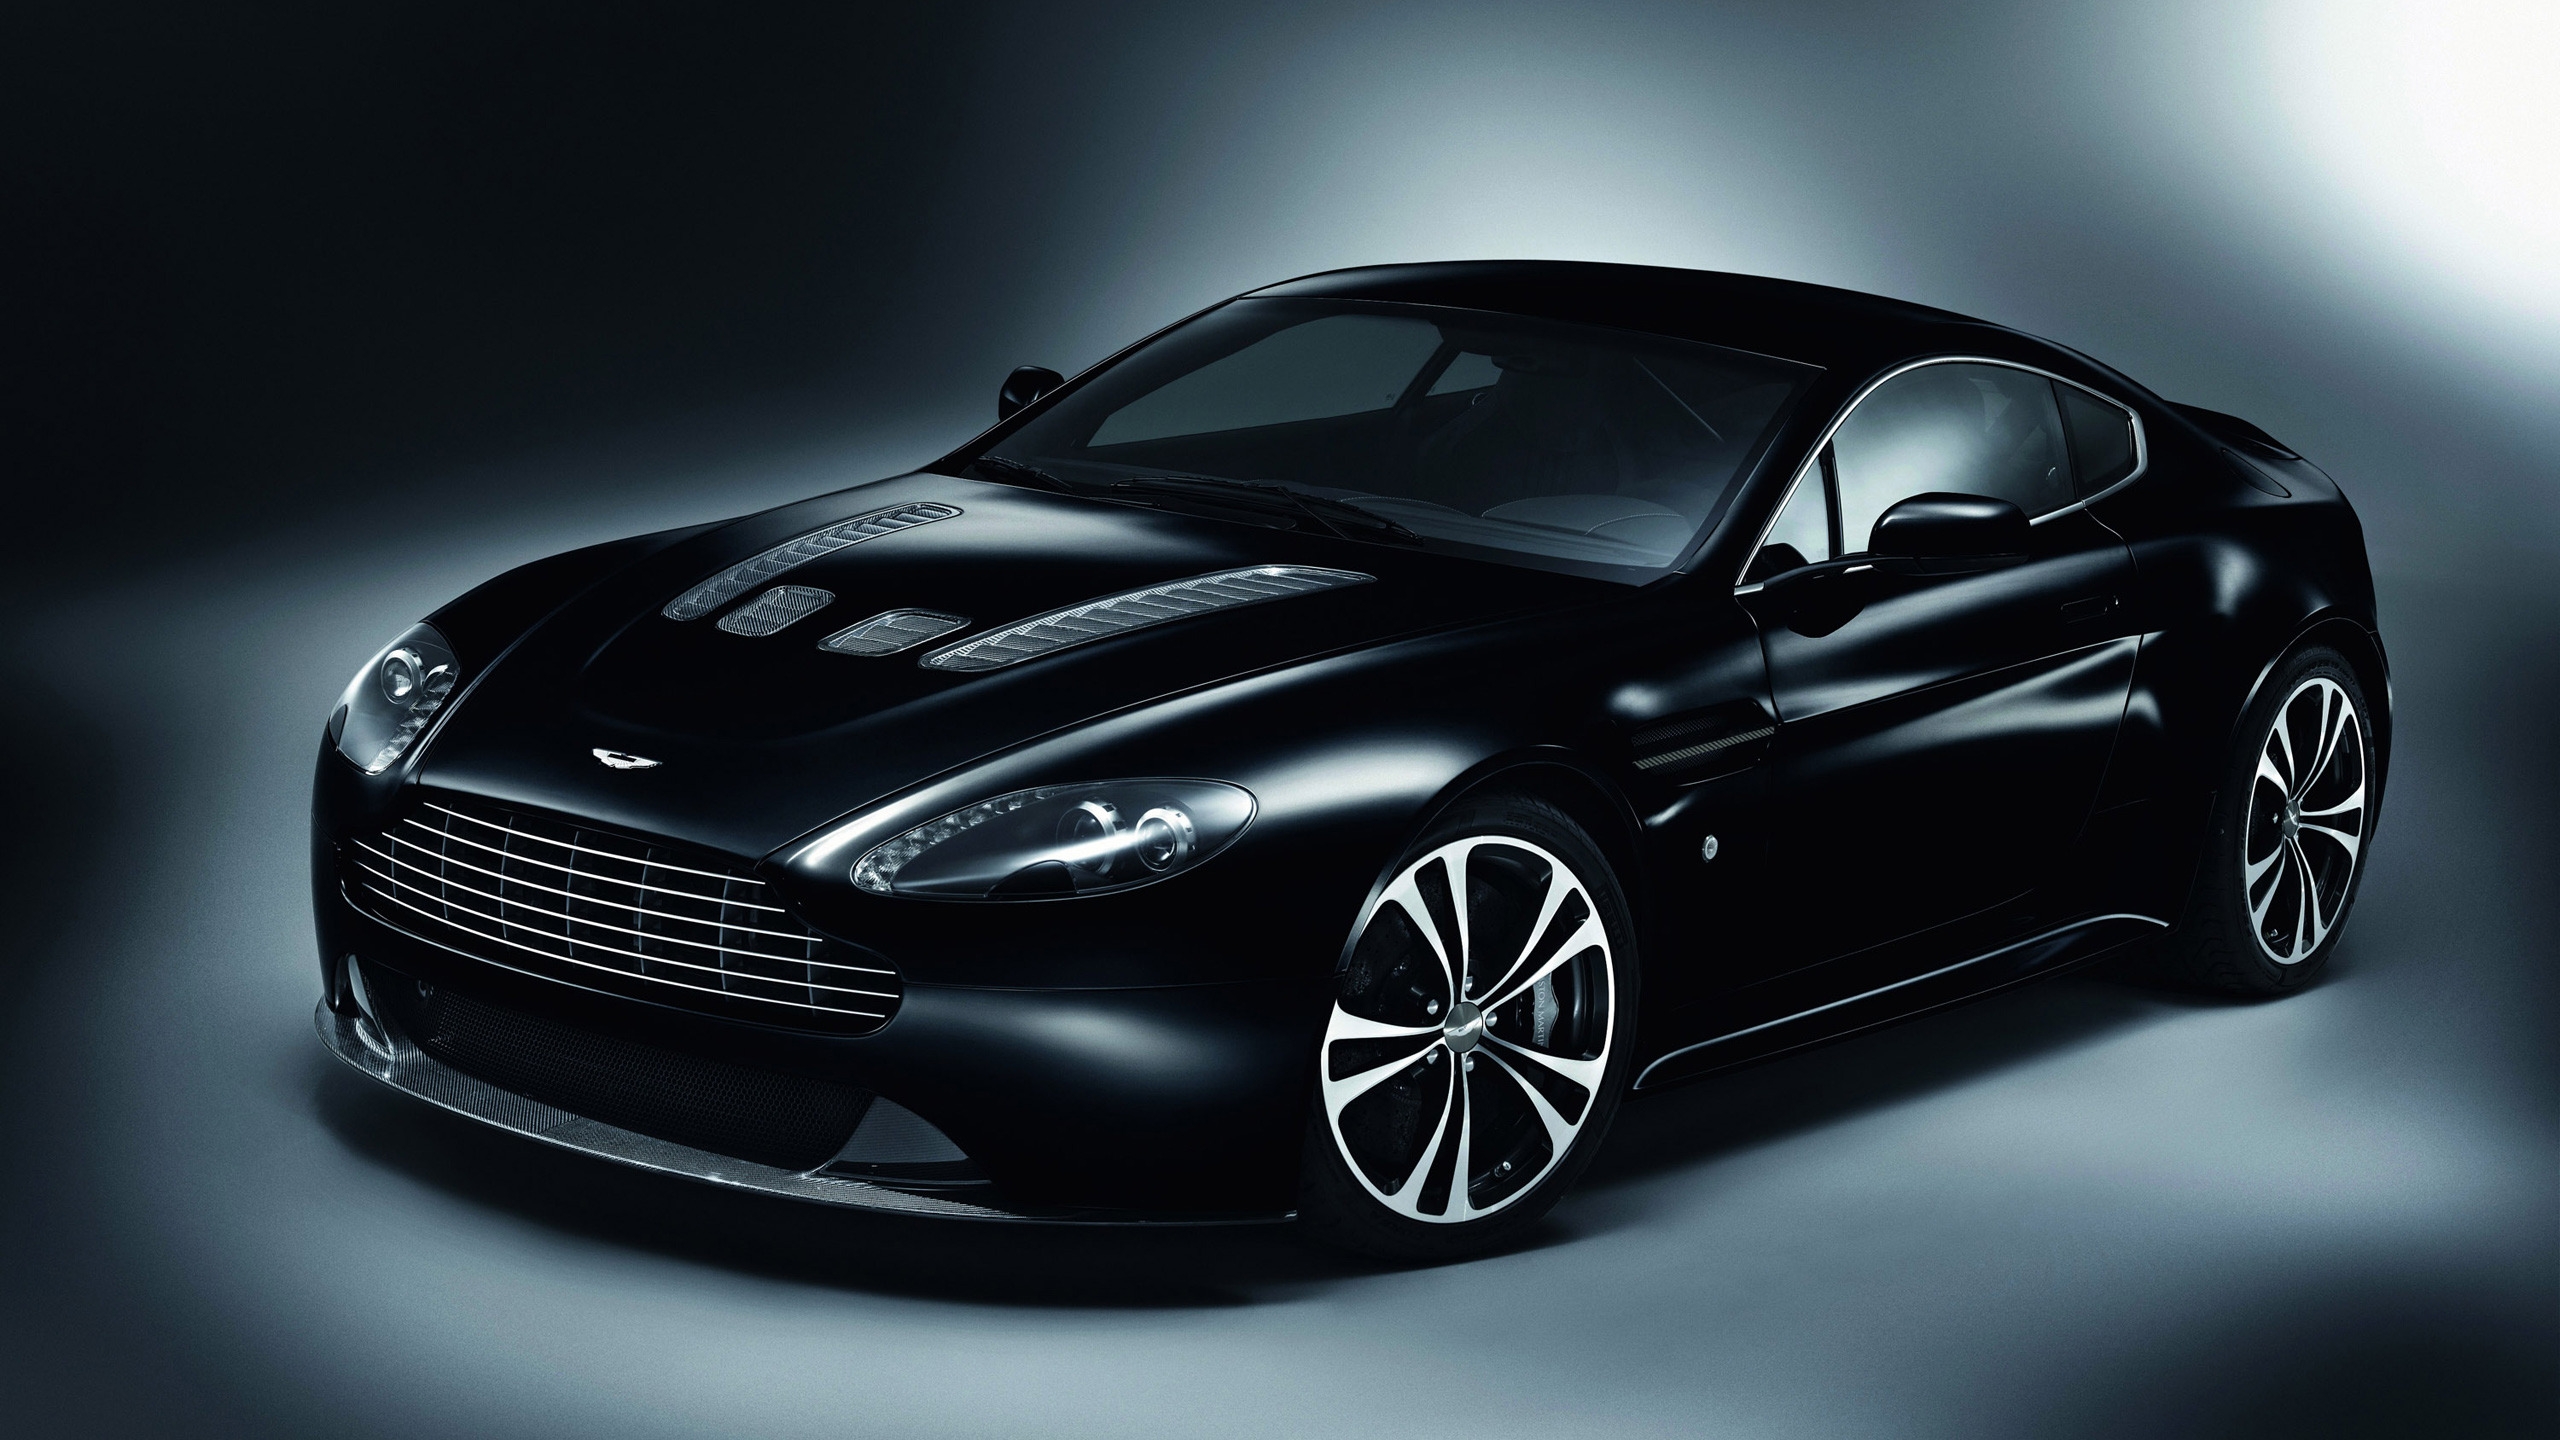 Aston Martin V12 Vantage Carbon Black for 2560x1440 HDTV resolution